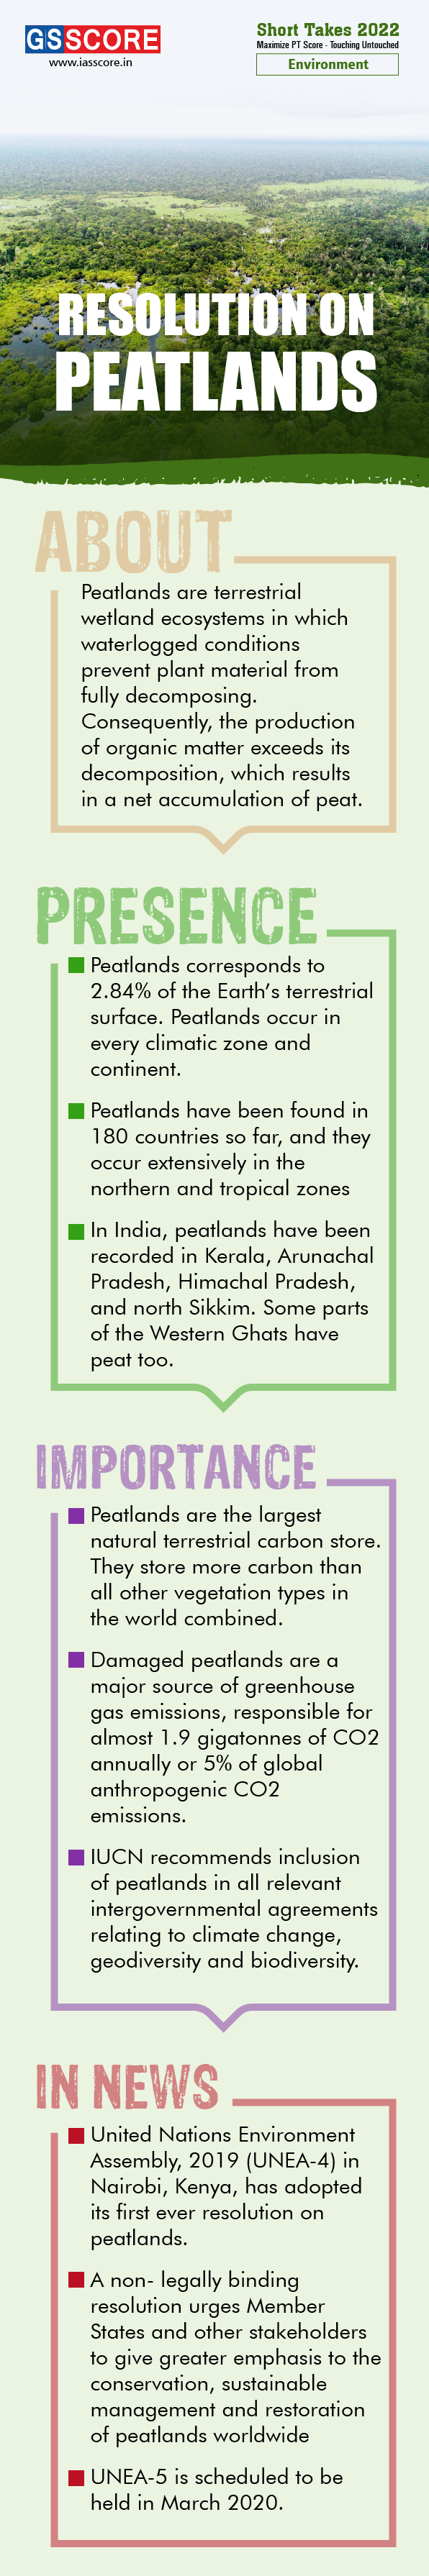 Resolution on Peatlands-